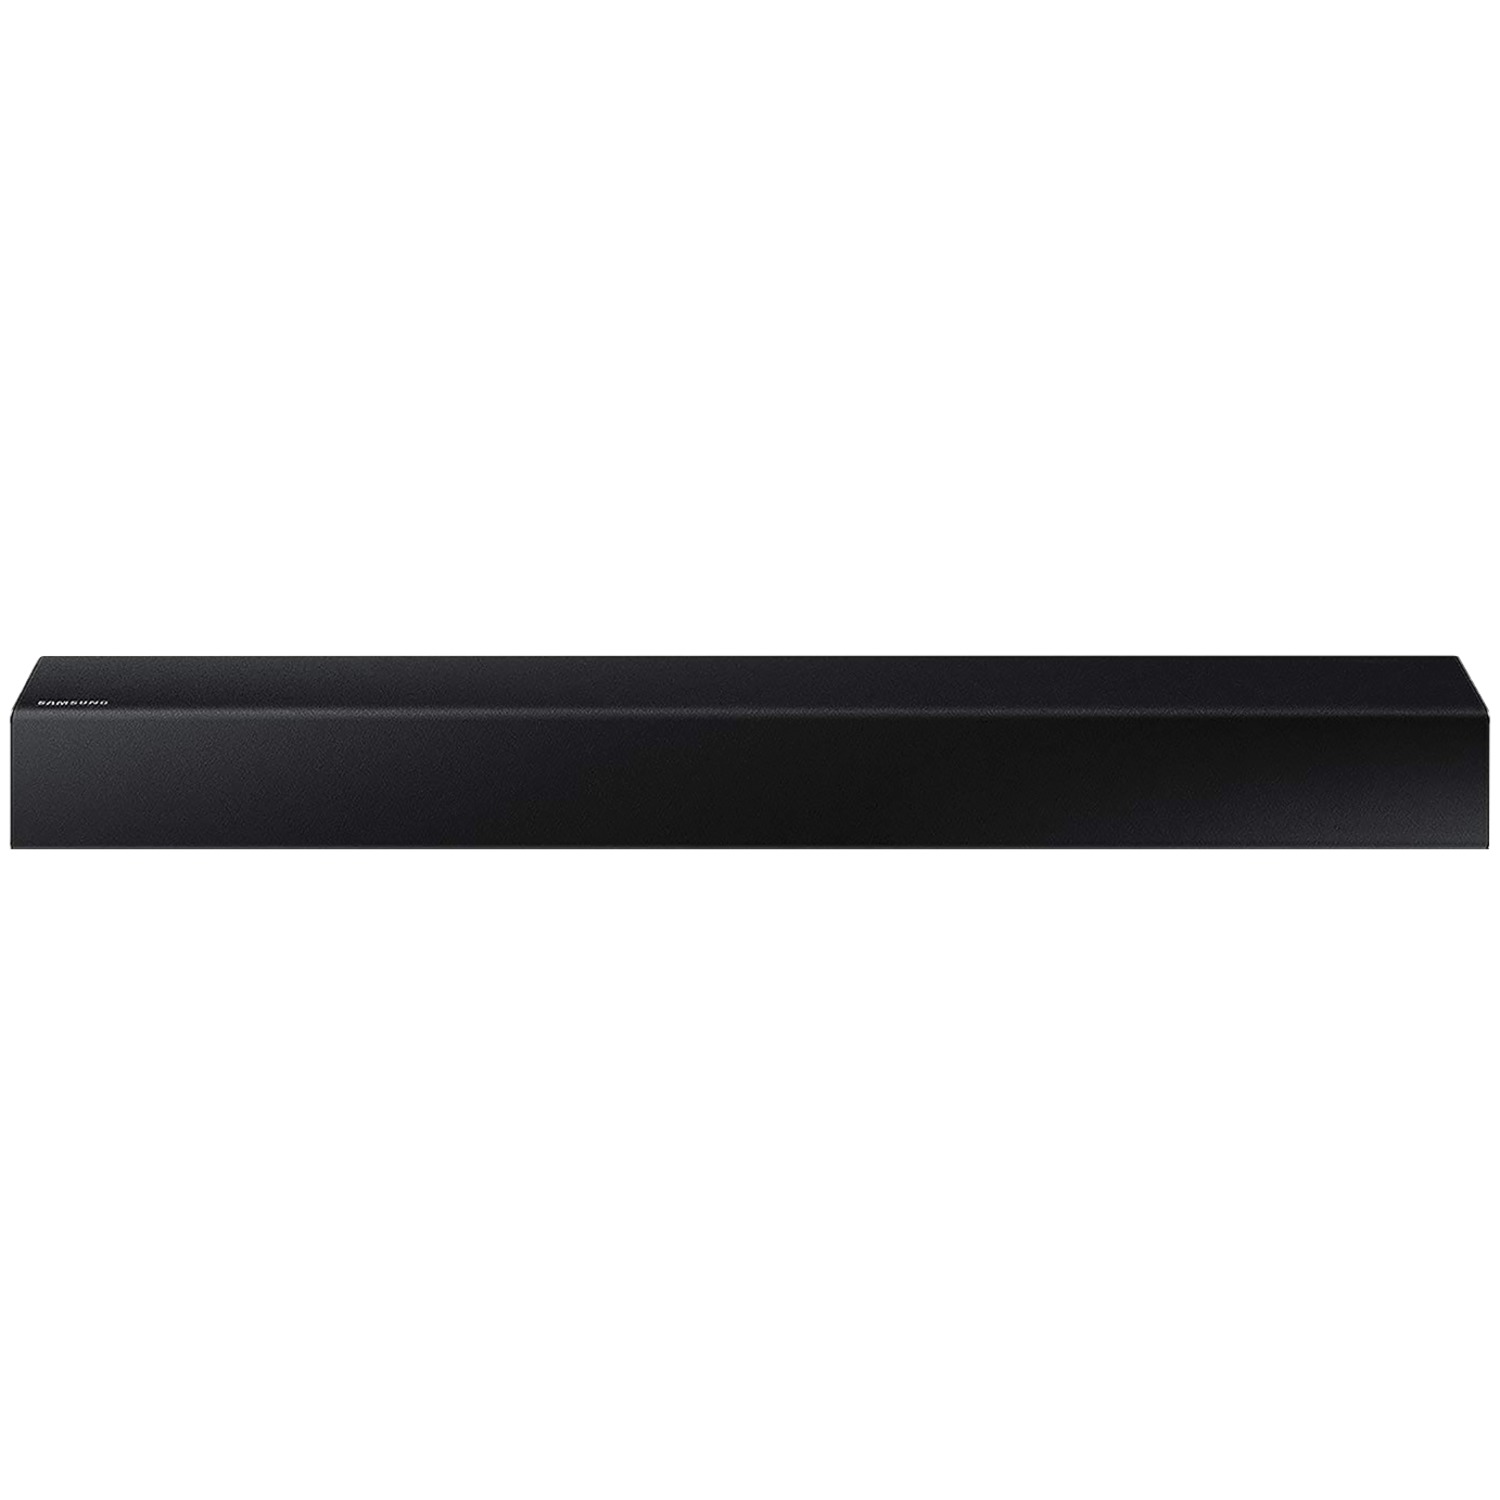 Samsung HW-N300/ZP 2.0-Channel TV Mate Bluetooth Sound Bar (HW-N300/ZP) - image 1 of 4